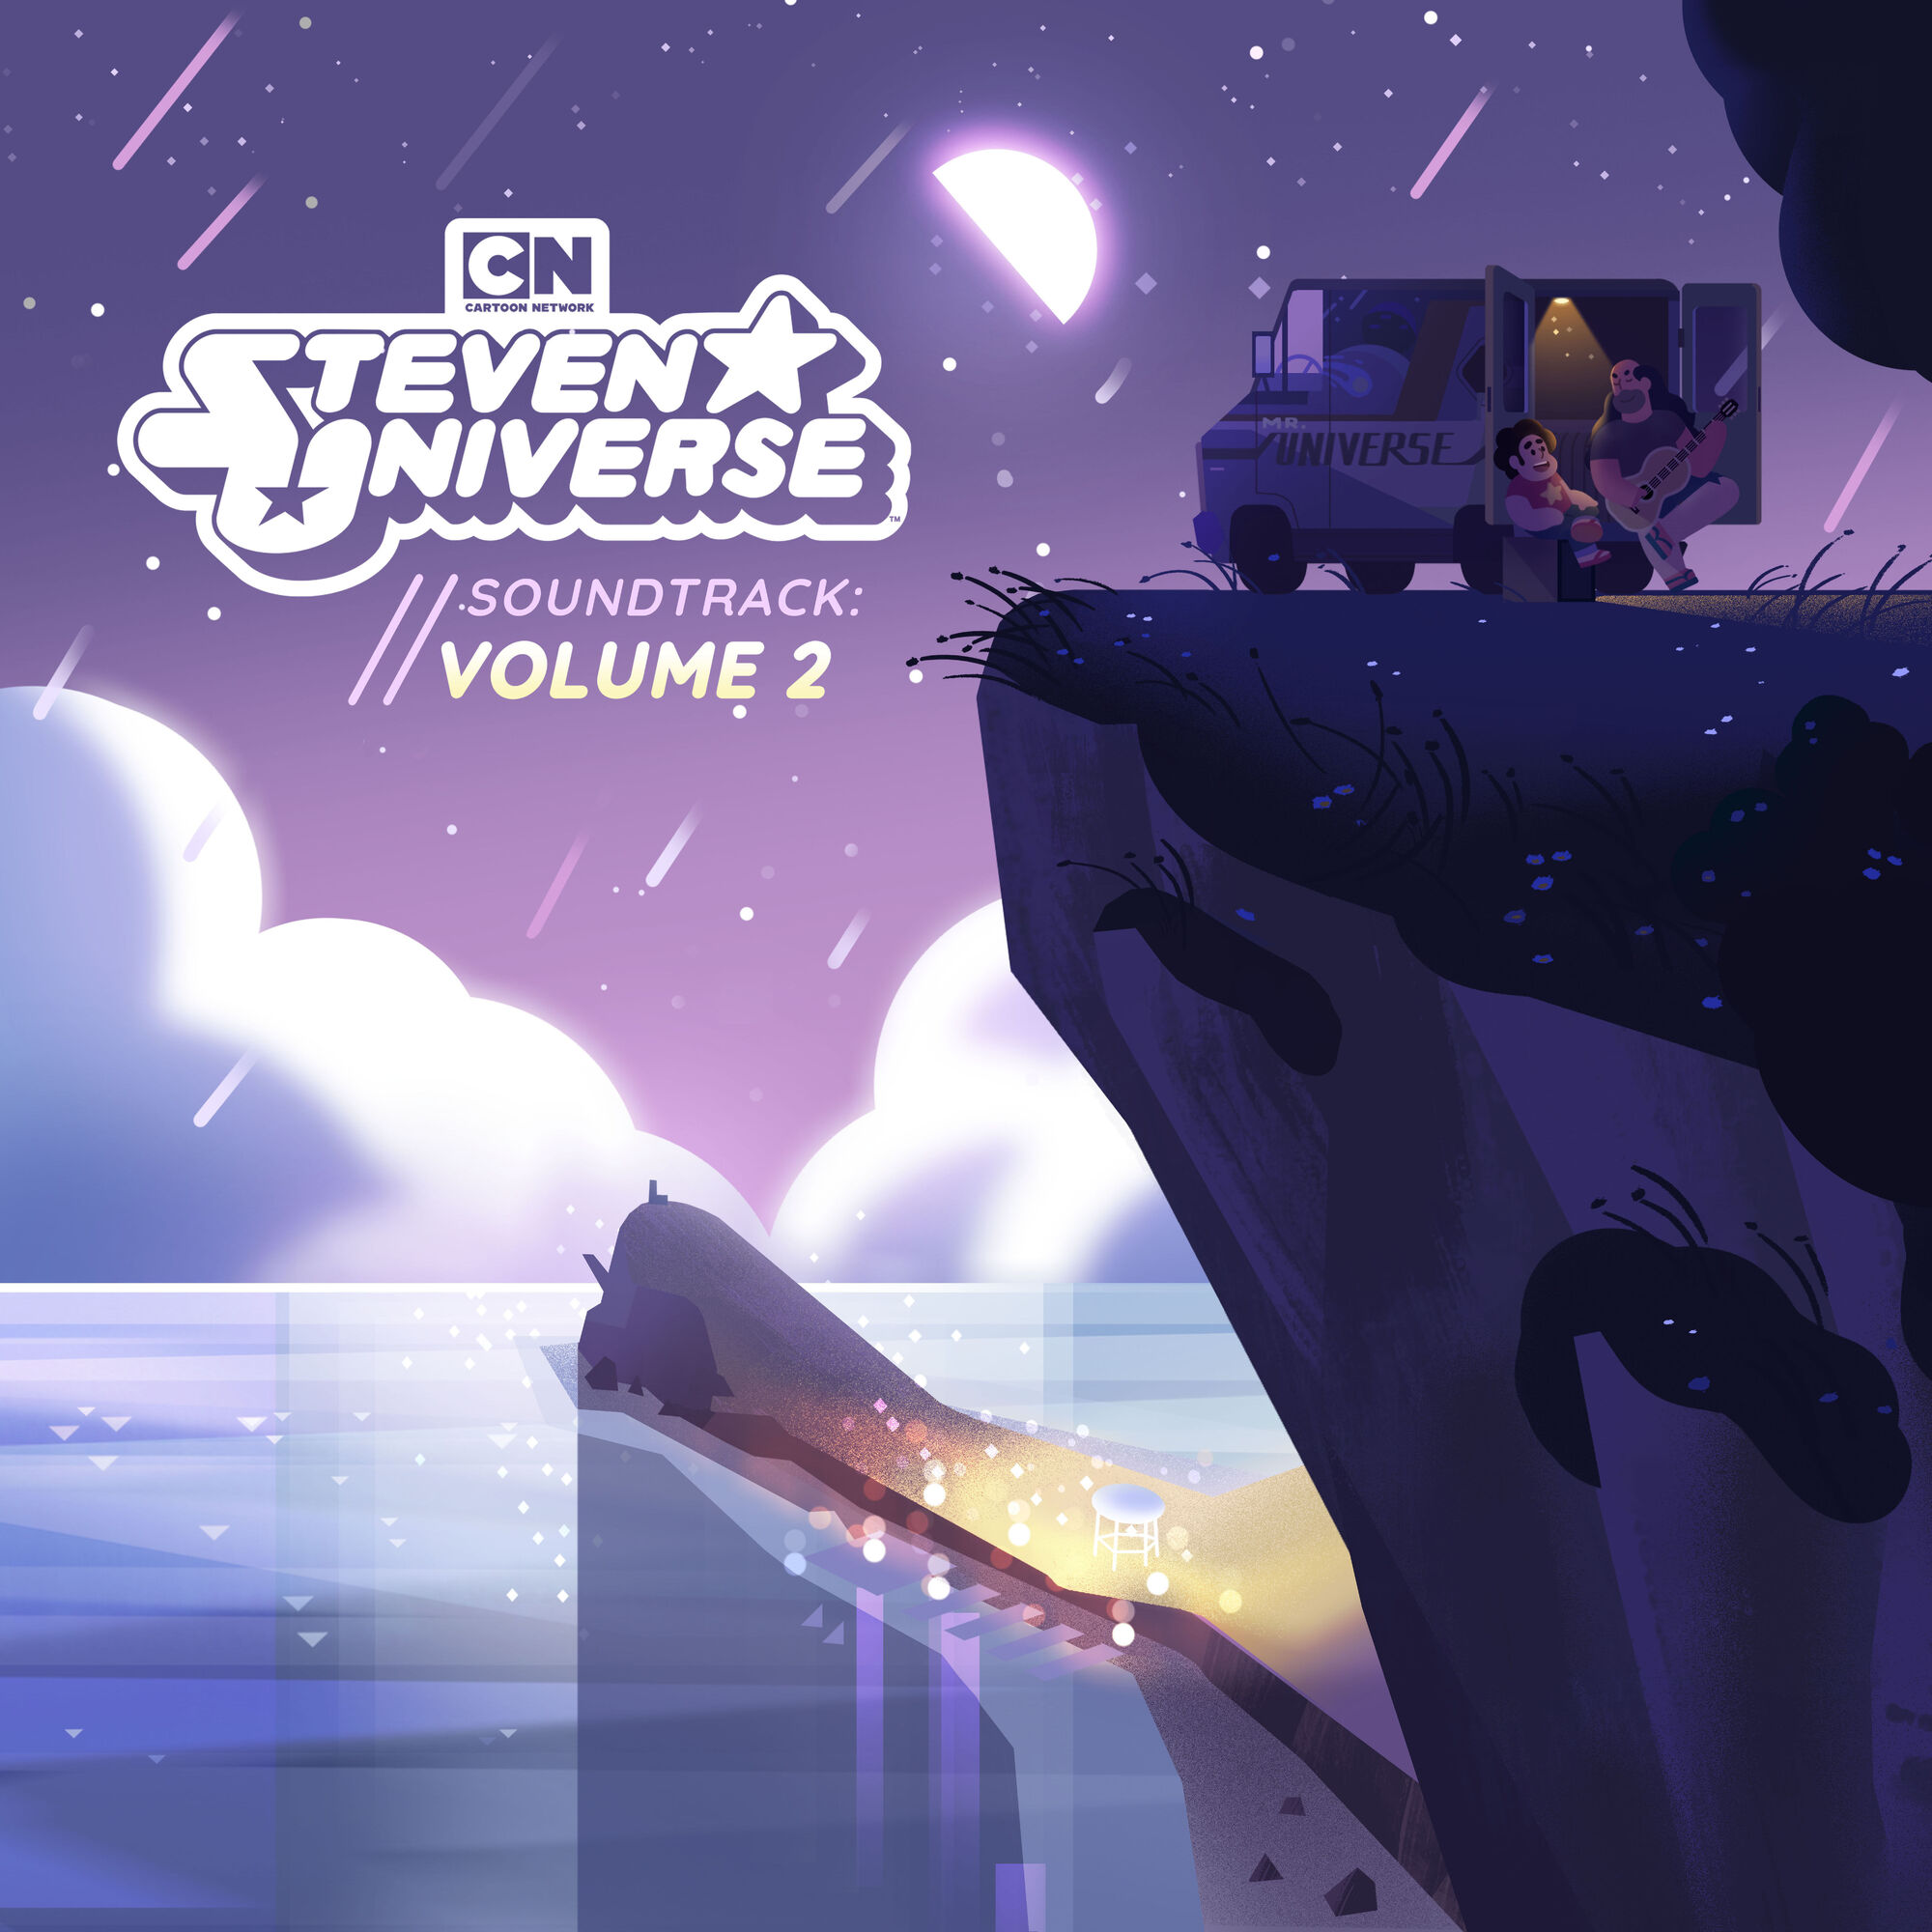 Steven universe season 1 soundtrack